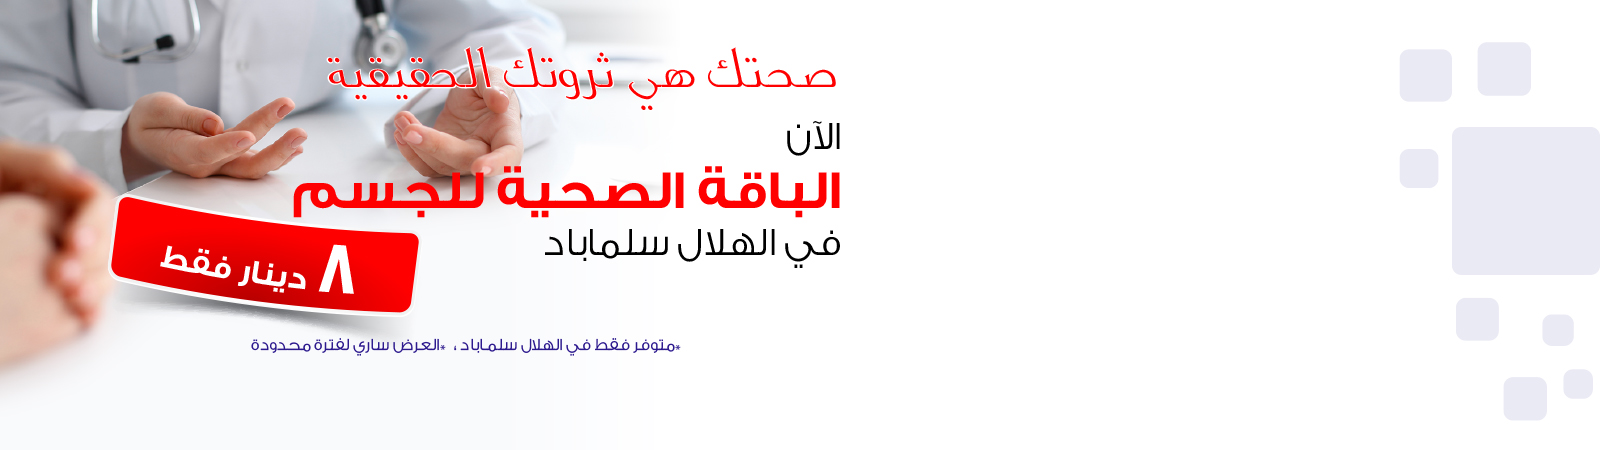 ALH-Website-Banner-ALHS-Healthy-Body-Package-1600-x-450-Arabic